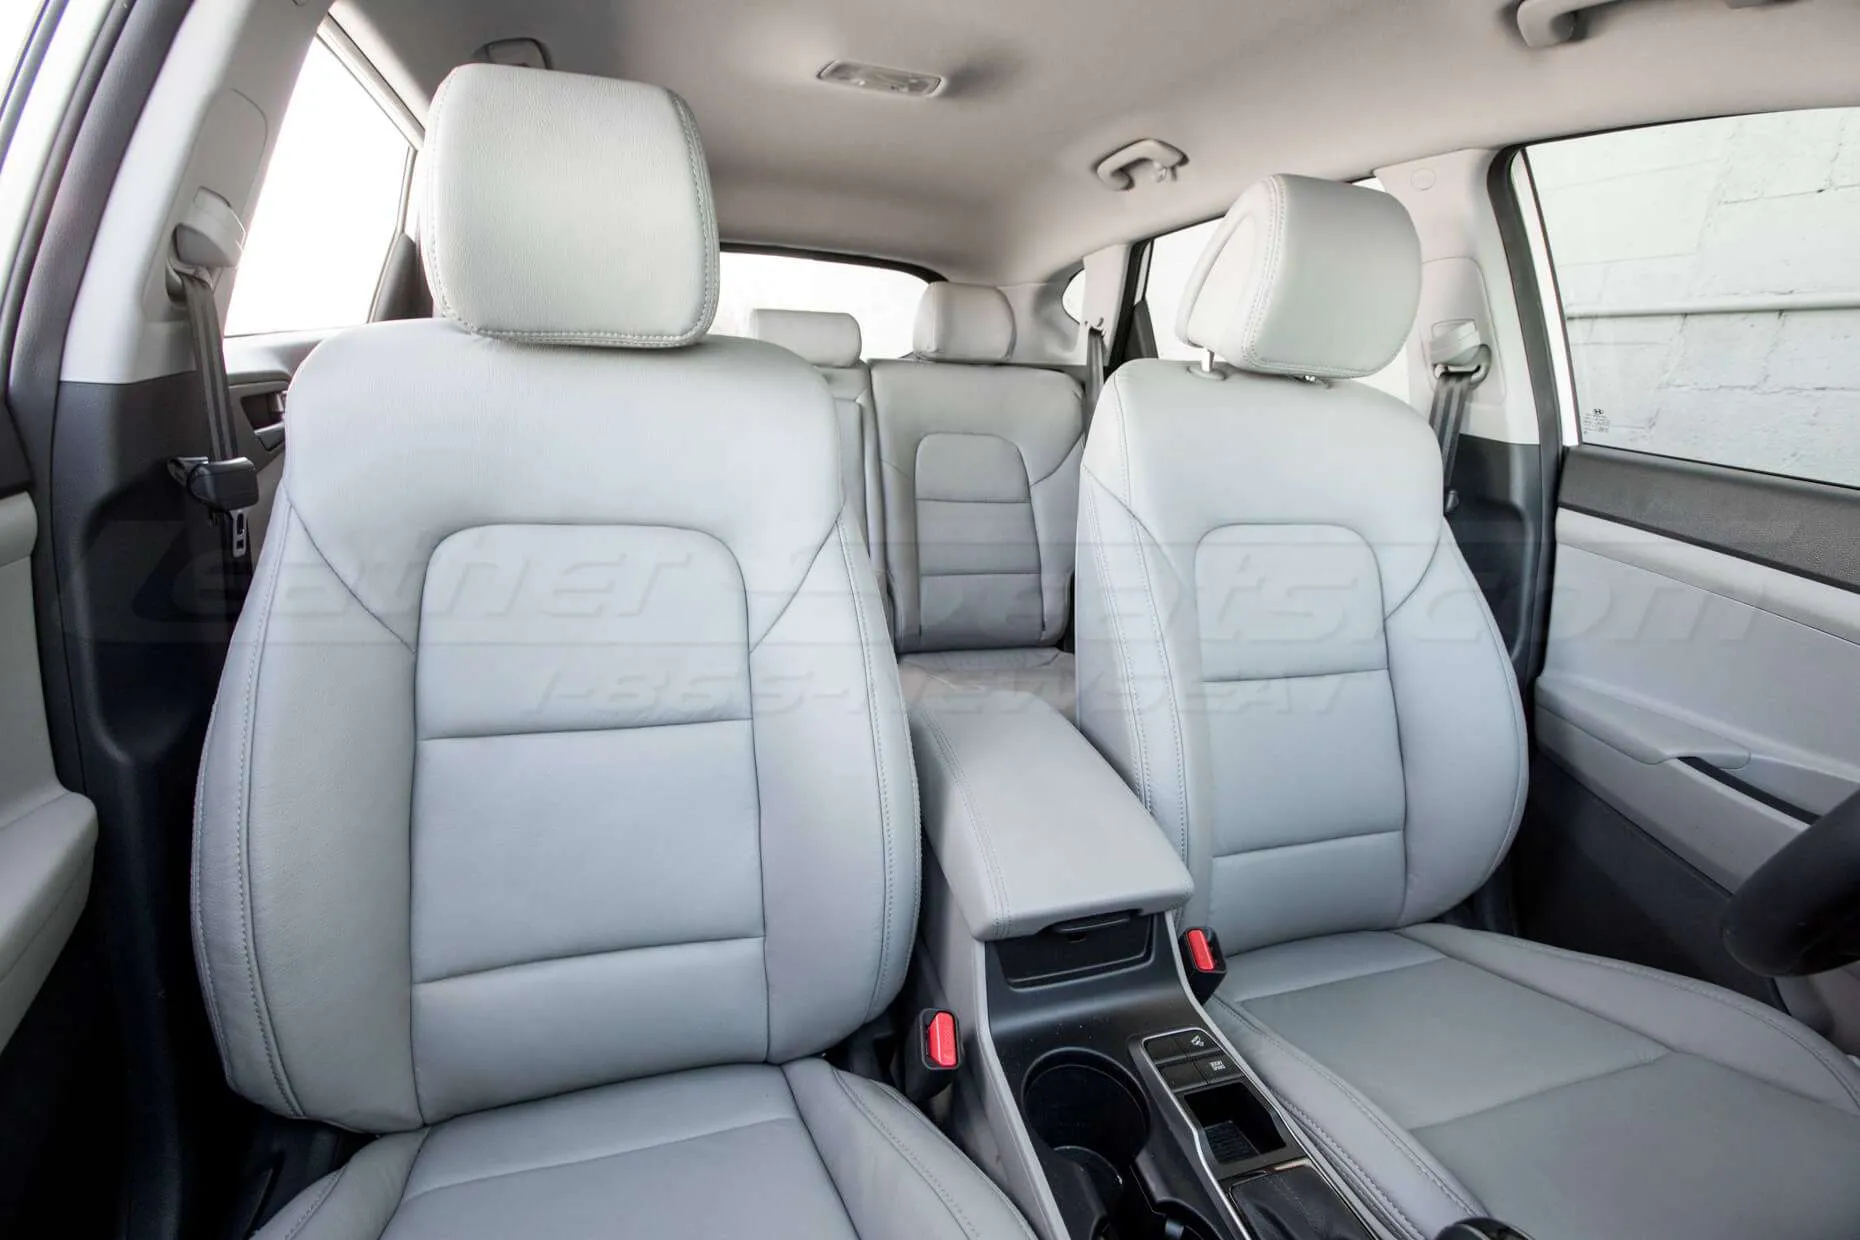 Honda Tucson Installed Leather Seats - Ash - Front interior